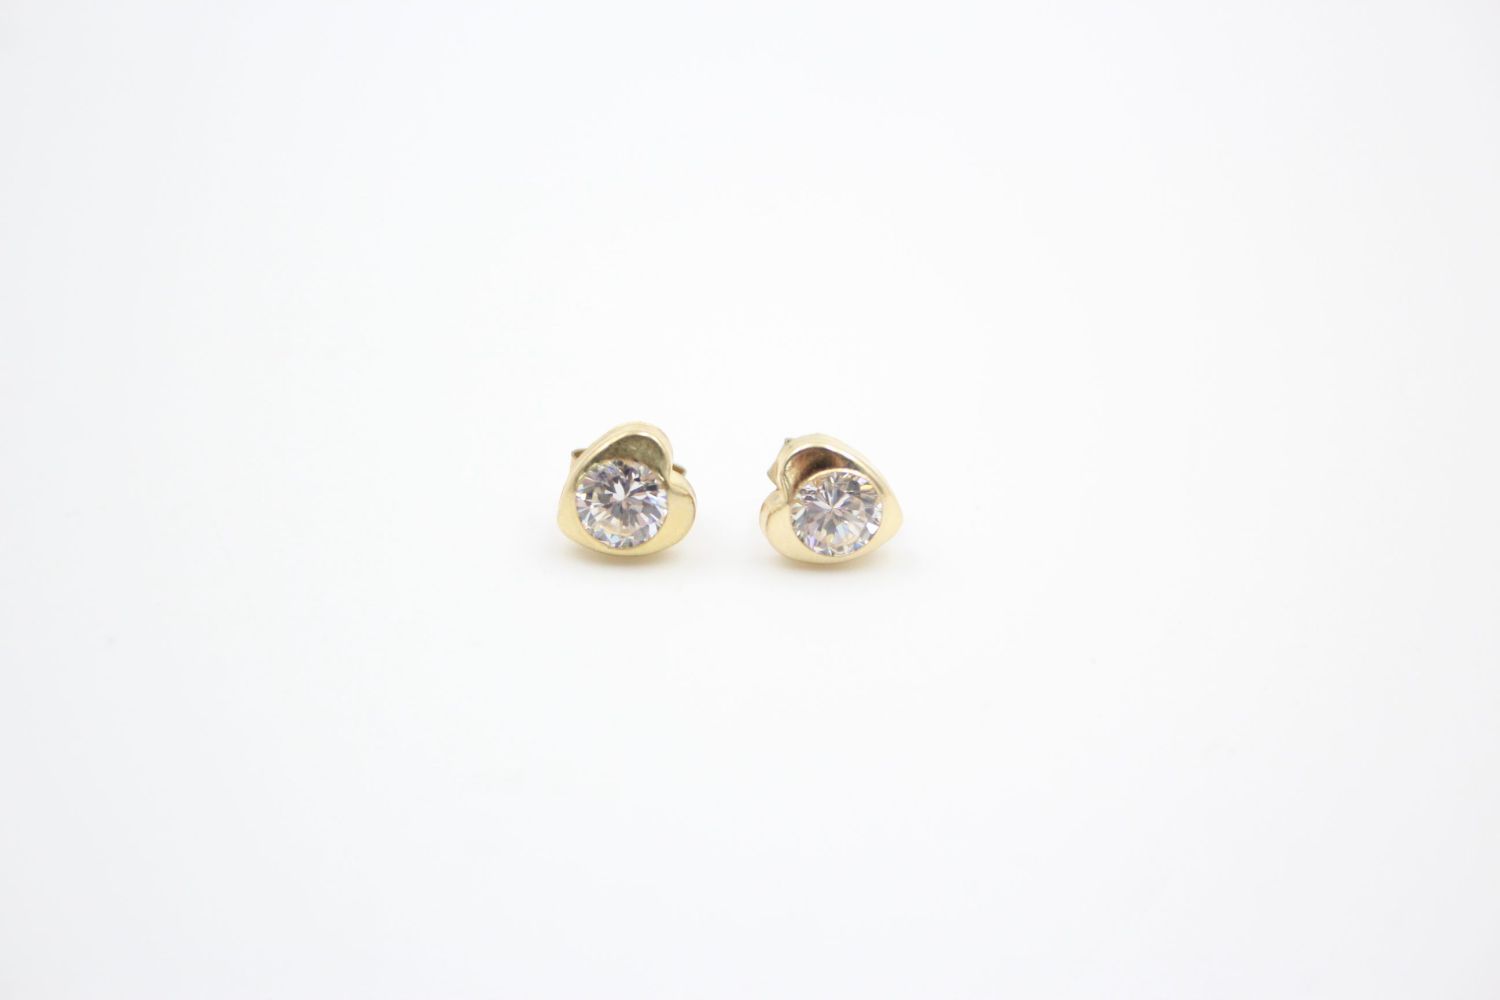 2 x 9ct gold gemstone stud earrings 1.6 grams gross - Image 6 of 10